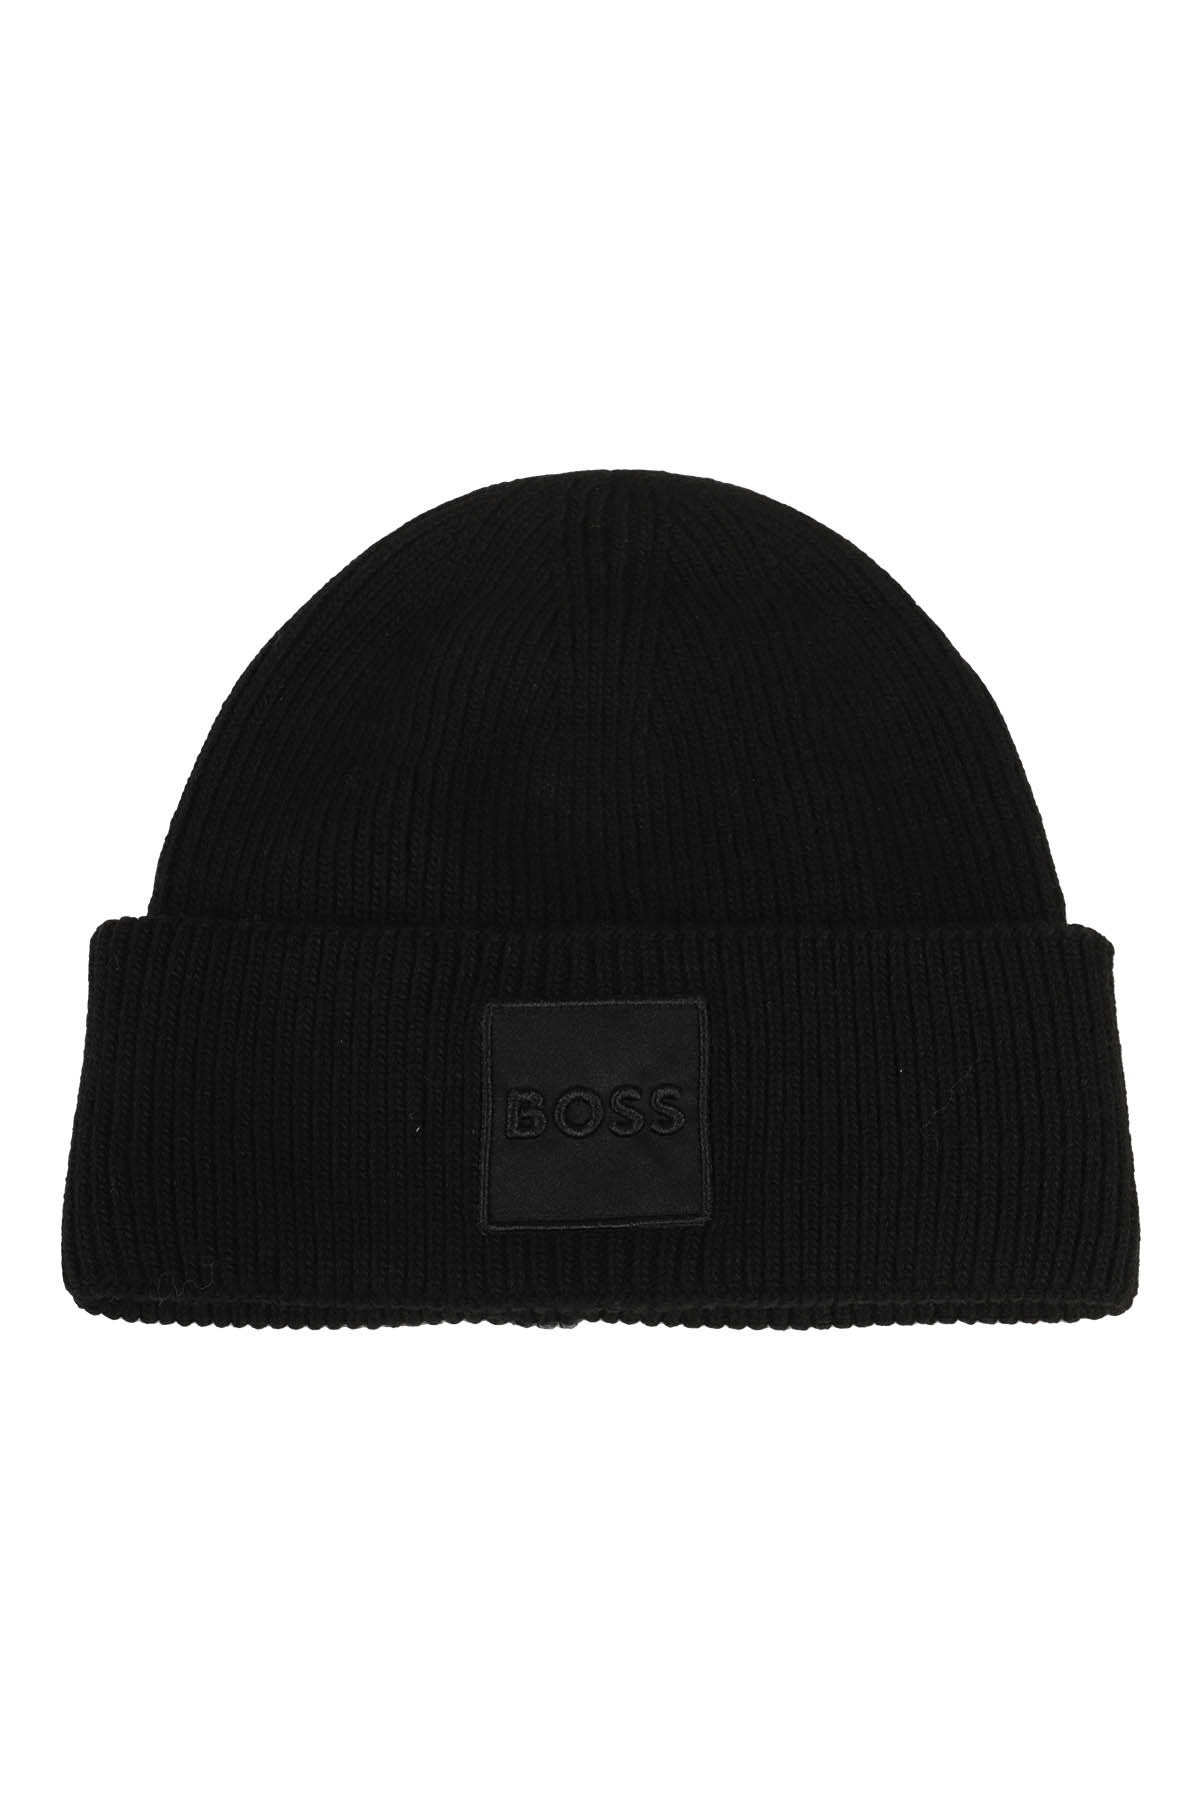 Hugo Boss Myiconic Hat In Black